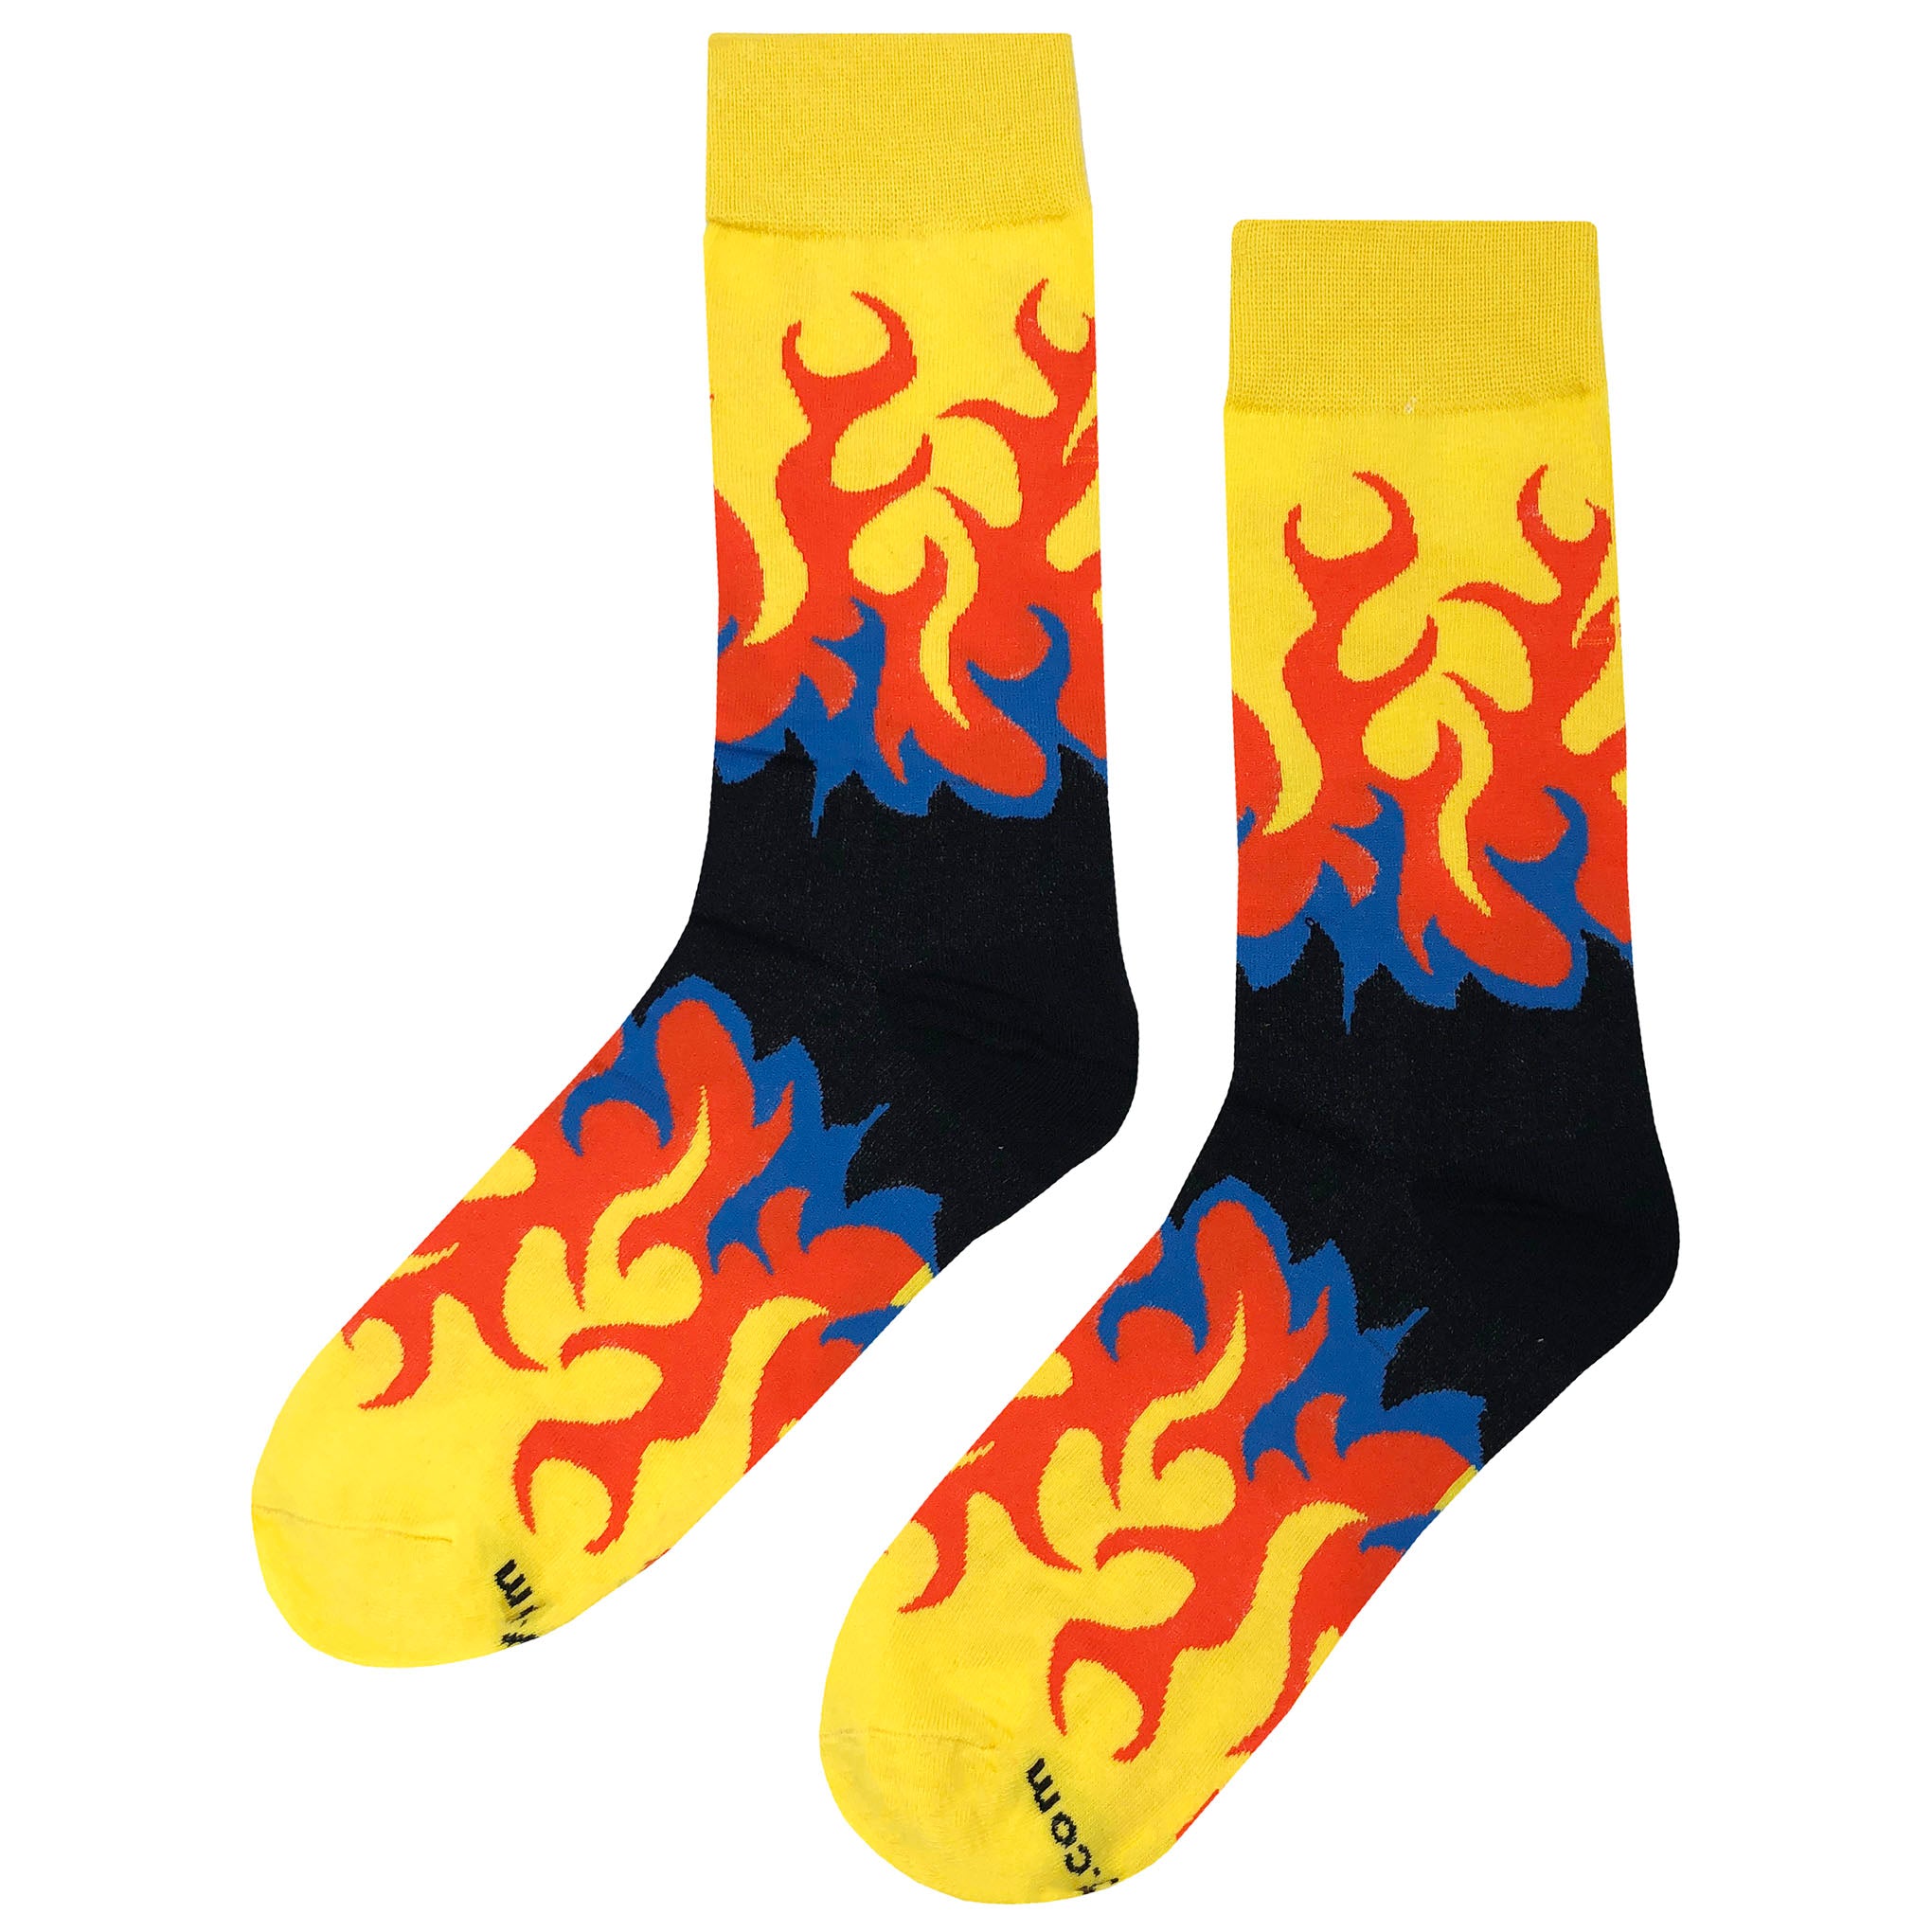 Hot Flame Socks - Fun and Crazy Socks at Sockfly.com